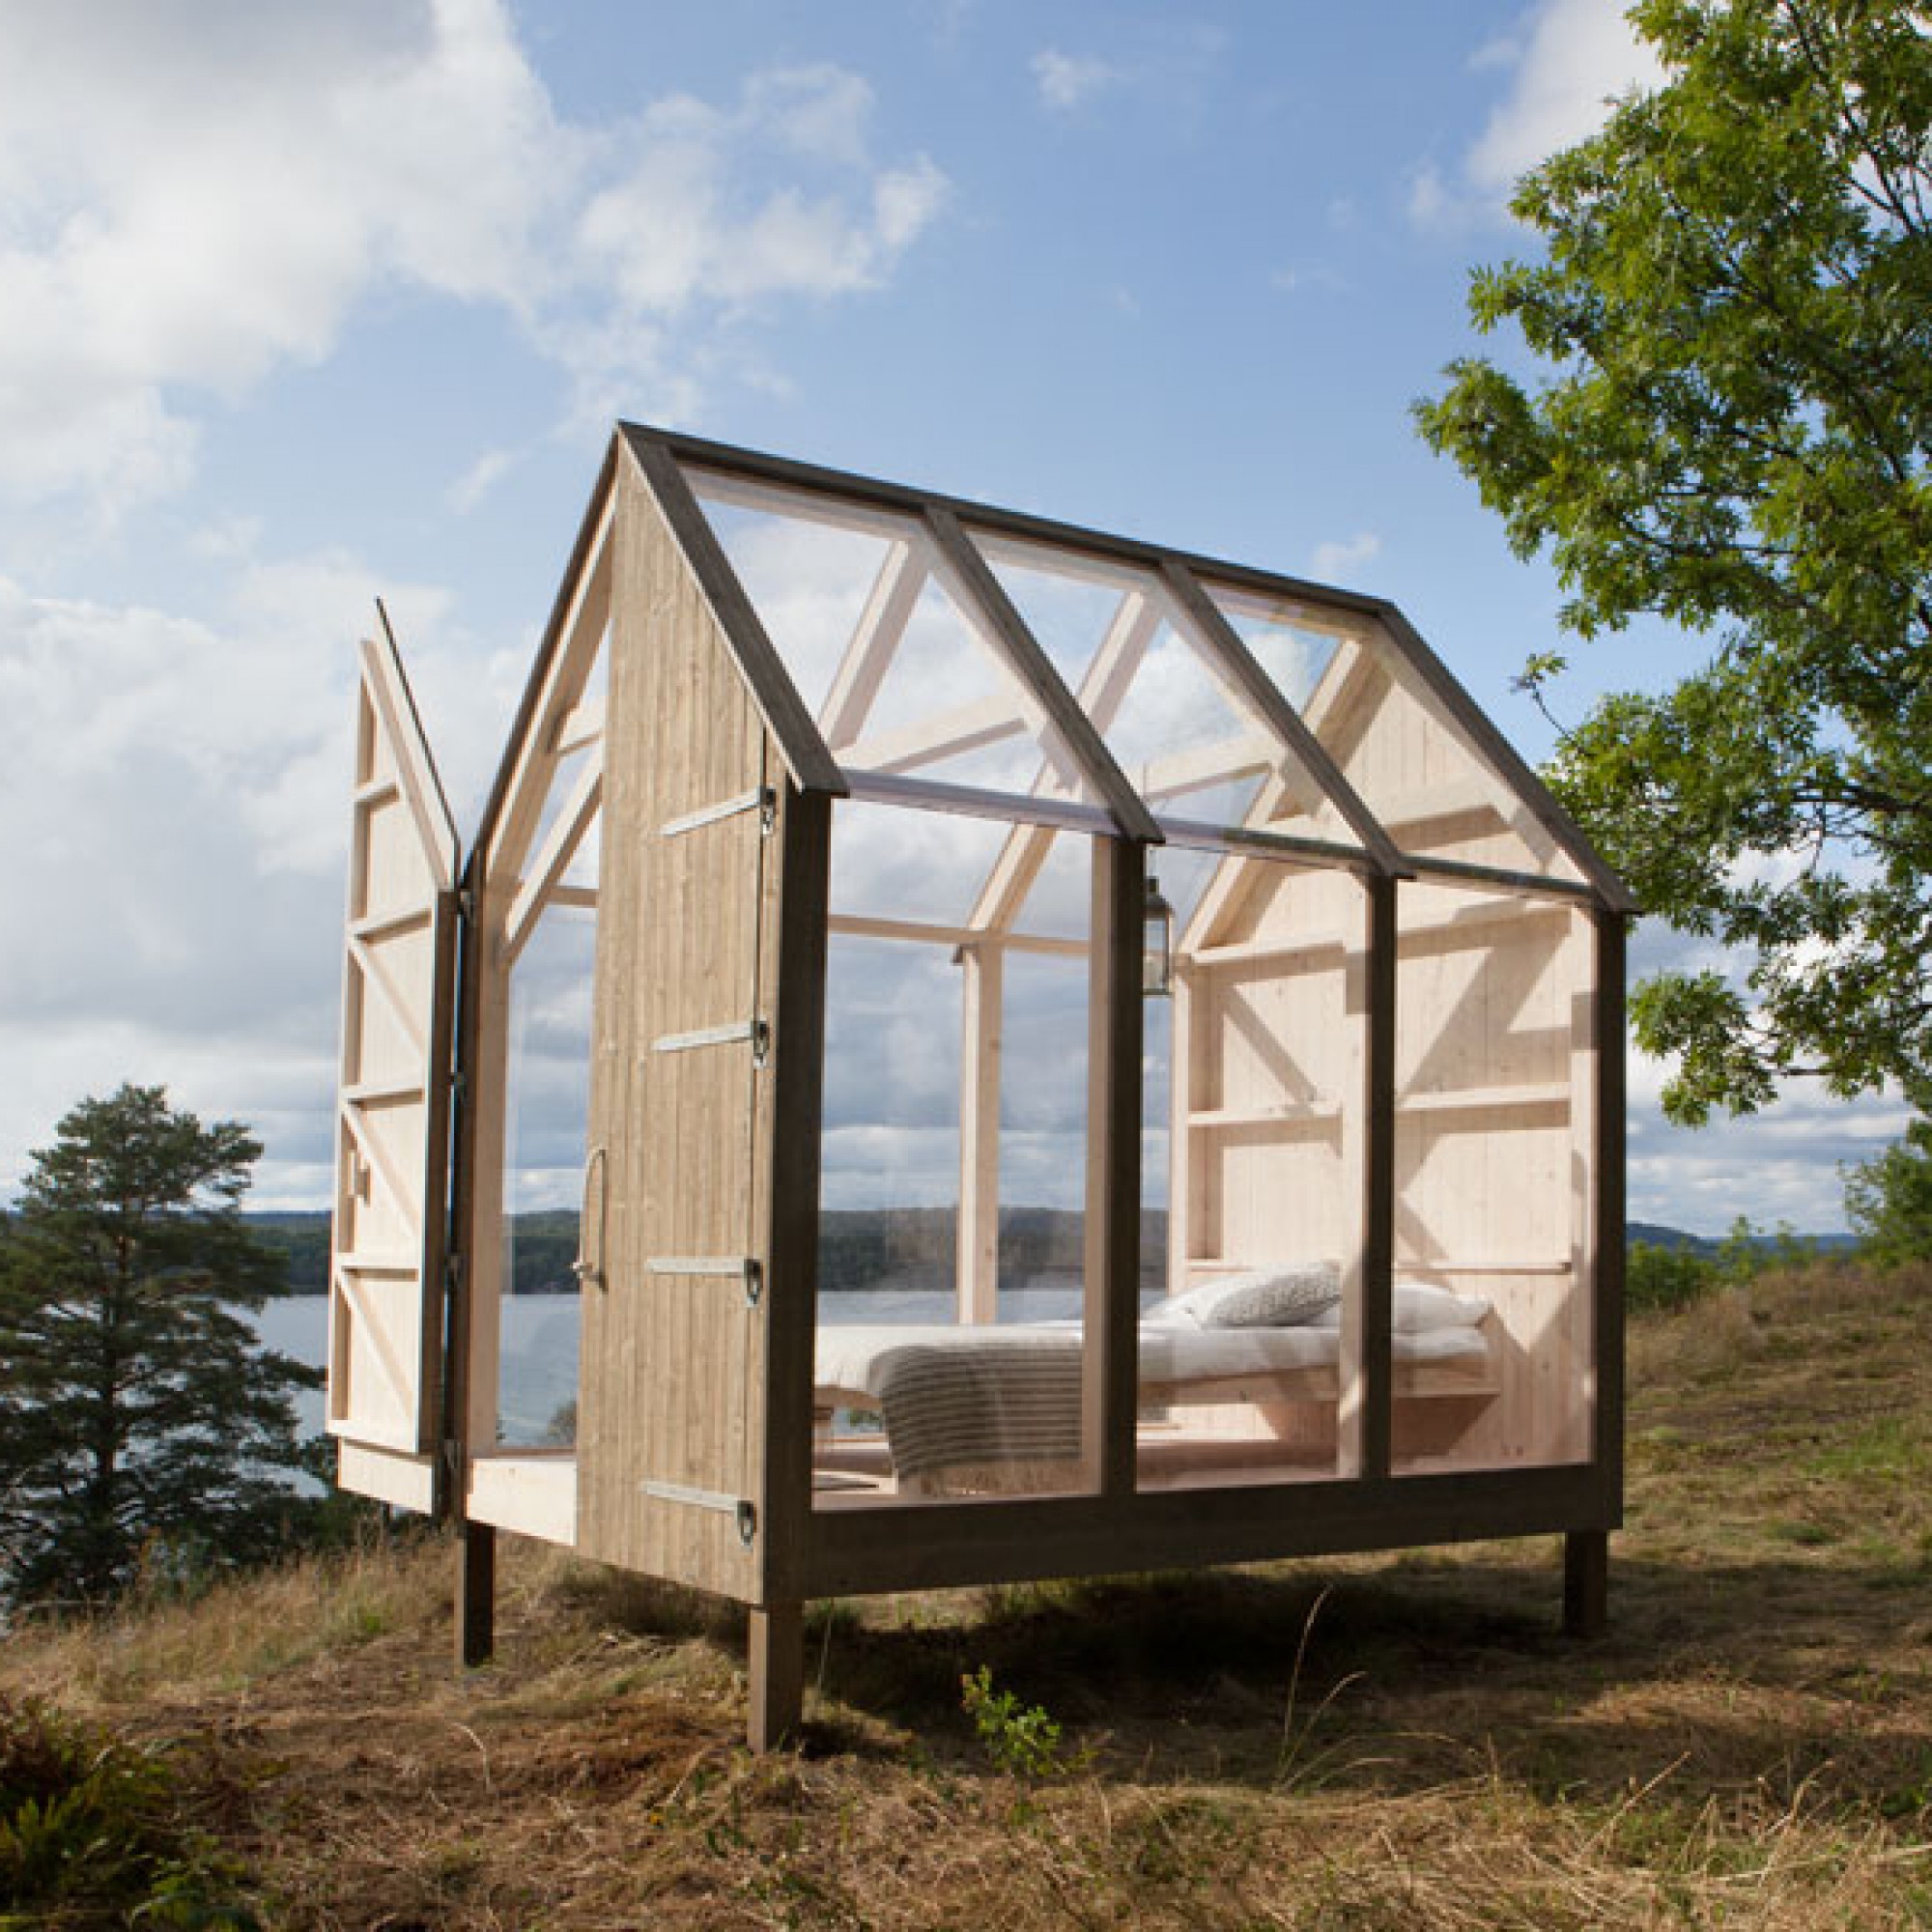 The 72 Hour Cabin (Bild: Visit Sweden, Maja Flink)